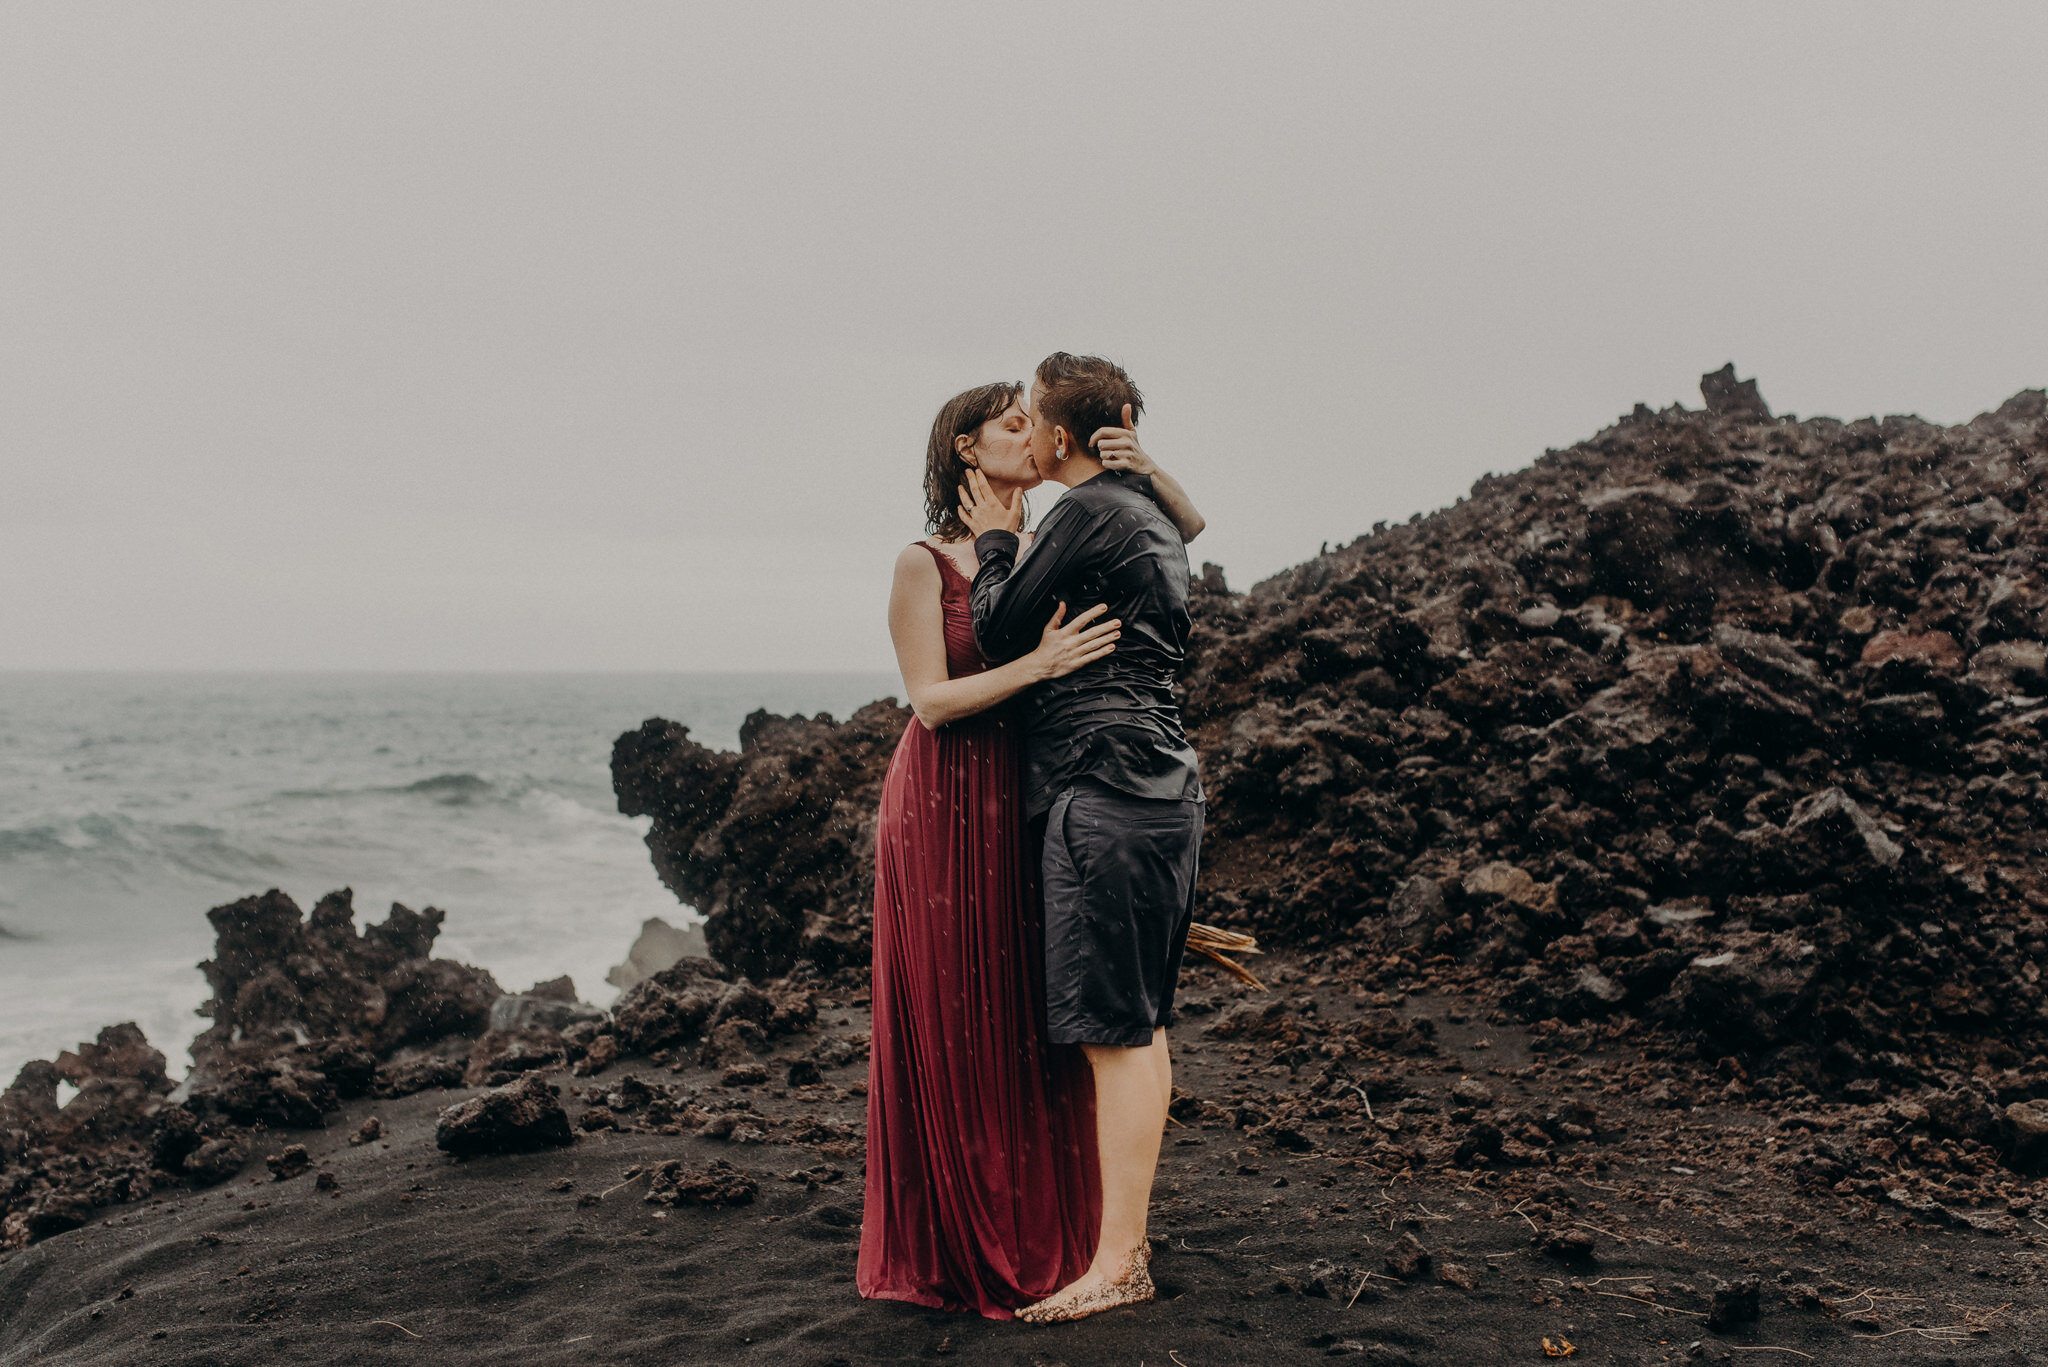 wedding photographer in los angeles - hawaii elopement photography - isaiahandtaylor.com-045.jpg